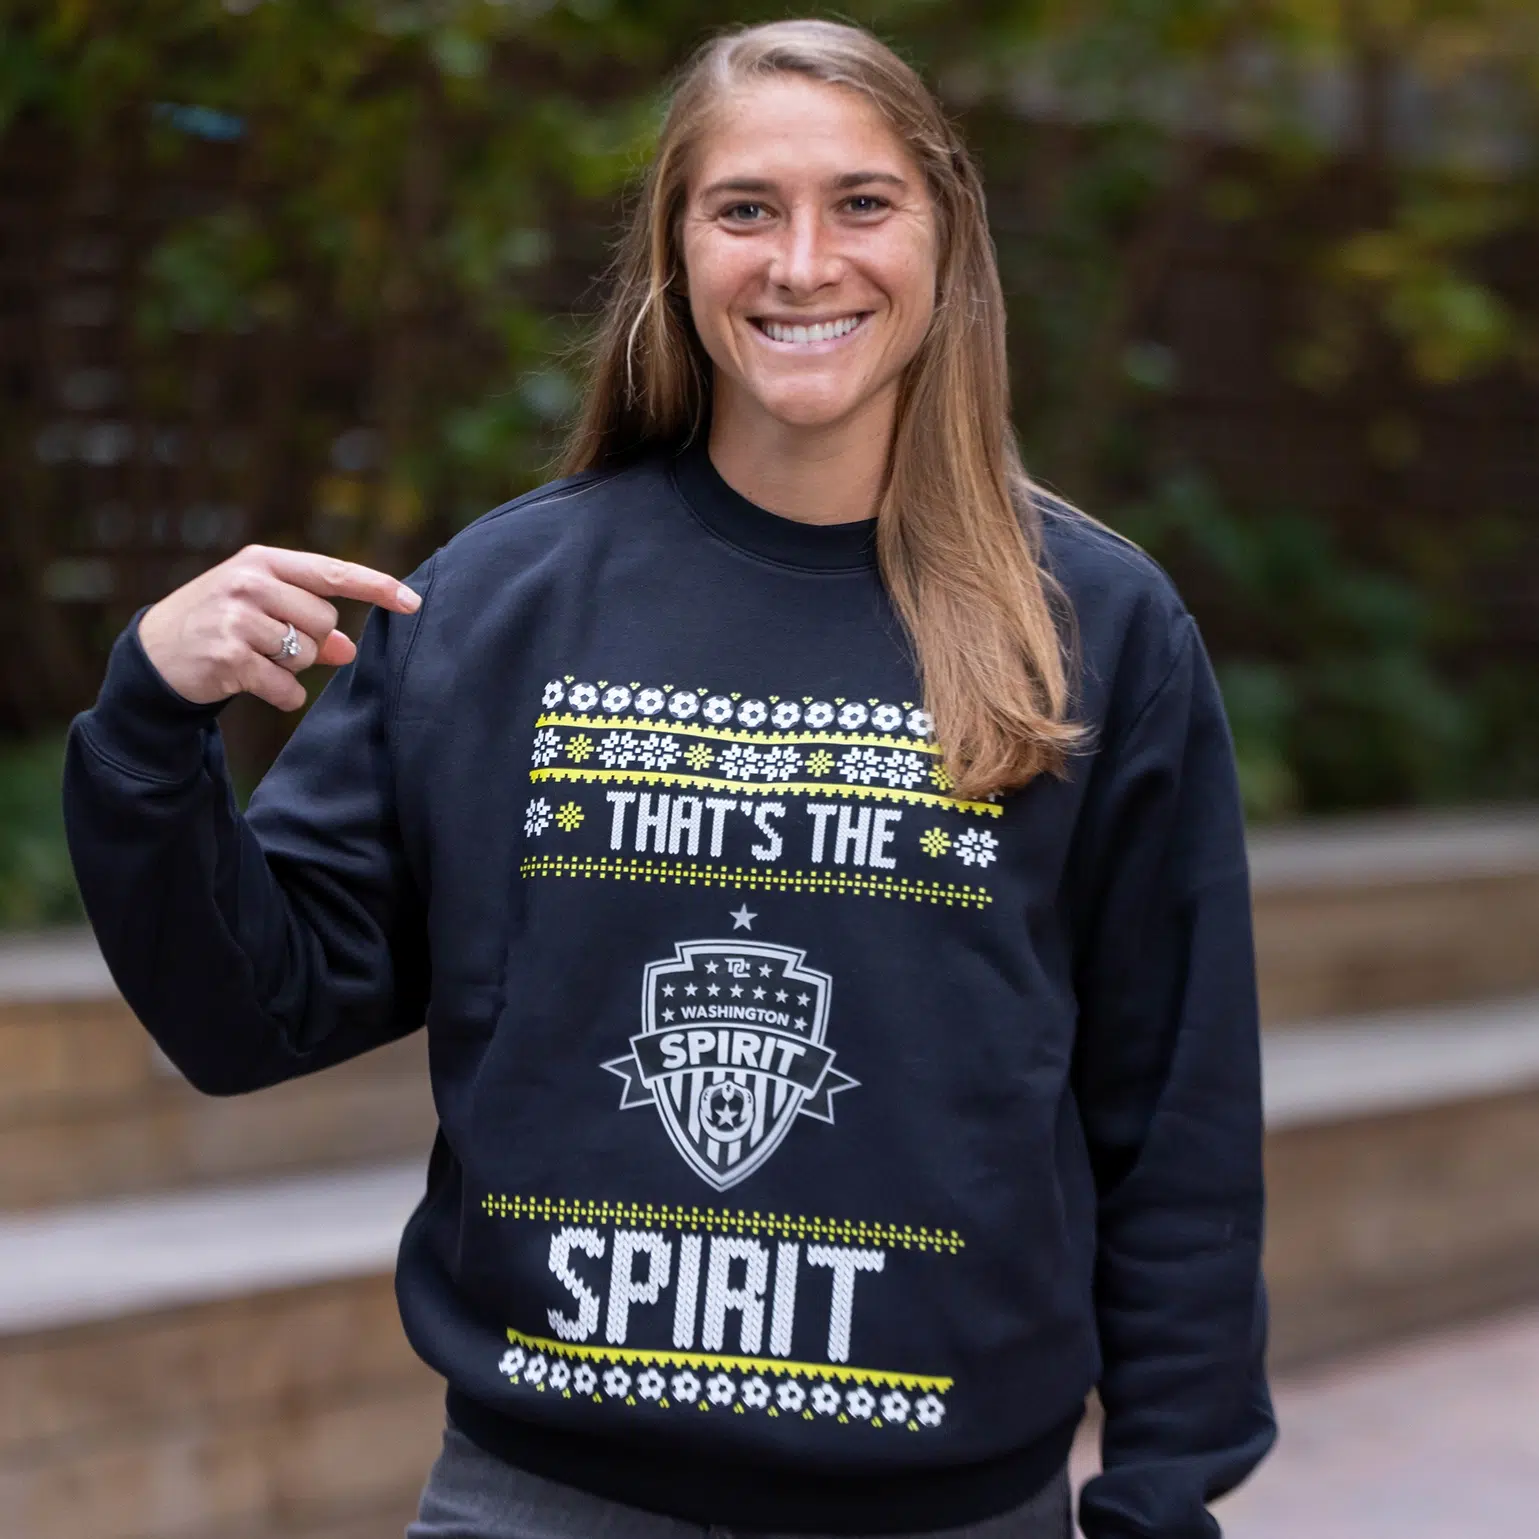 Aubrey Kingsbury wearing a black "That's the Spirit" holiday sweatshirt.